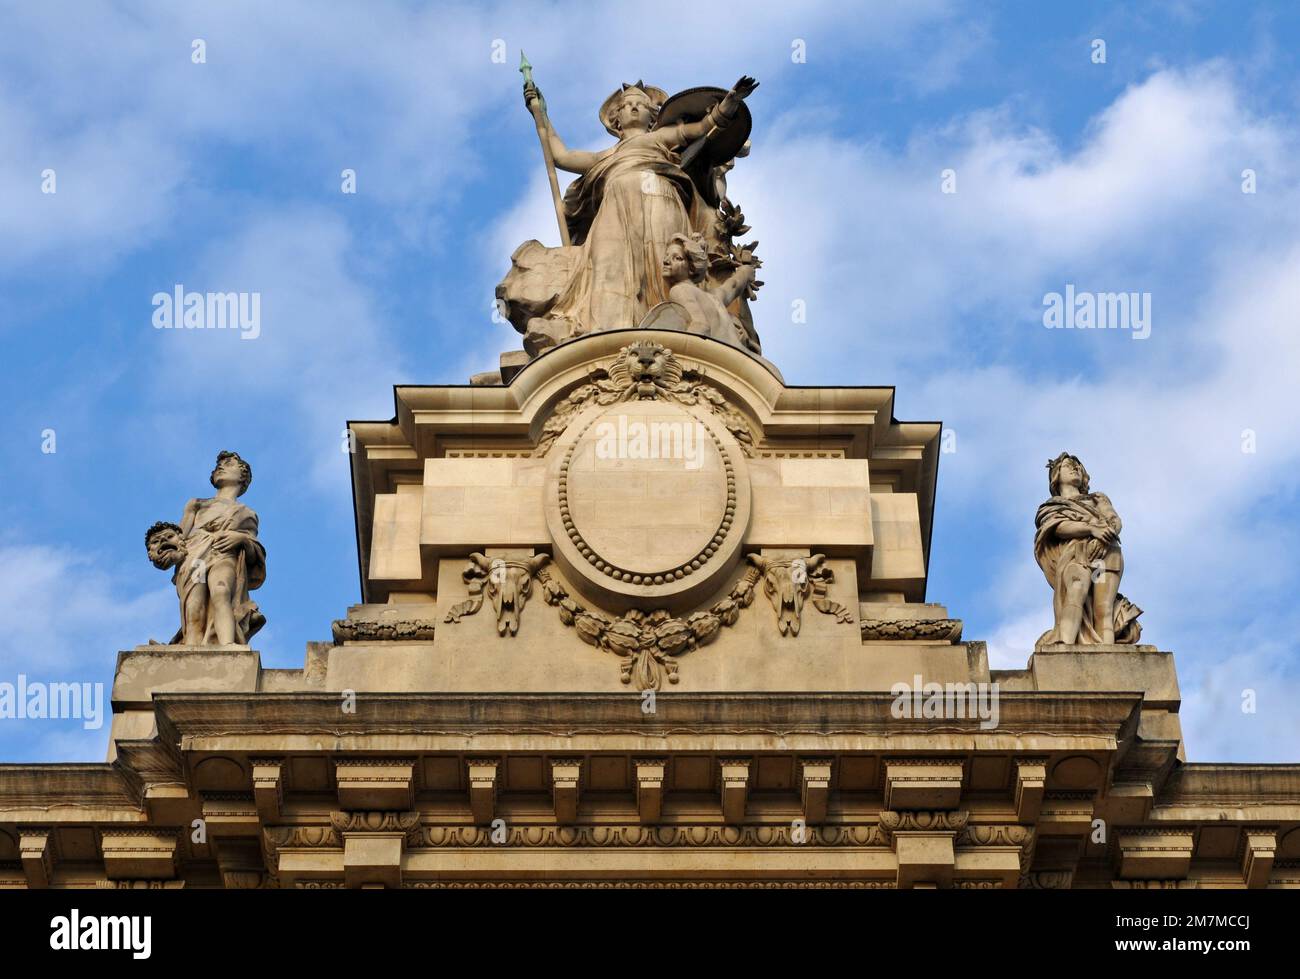 Sculptures atop the landmark Grand Palais in Paris. Built for the 1900 Paris Exhibition (world's fair), it's now an exhibition hall and museum complex. Stock Photo